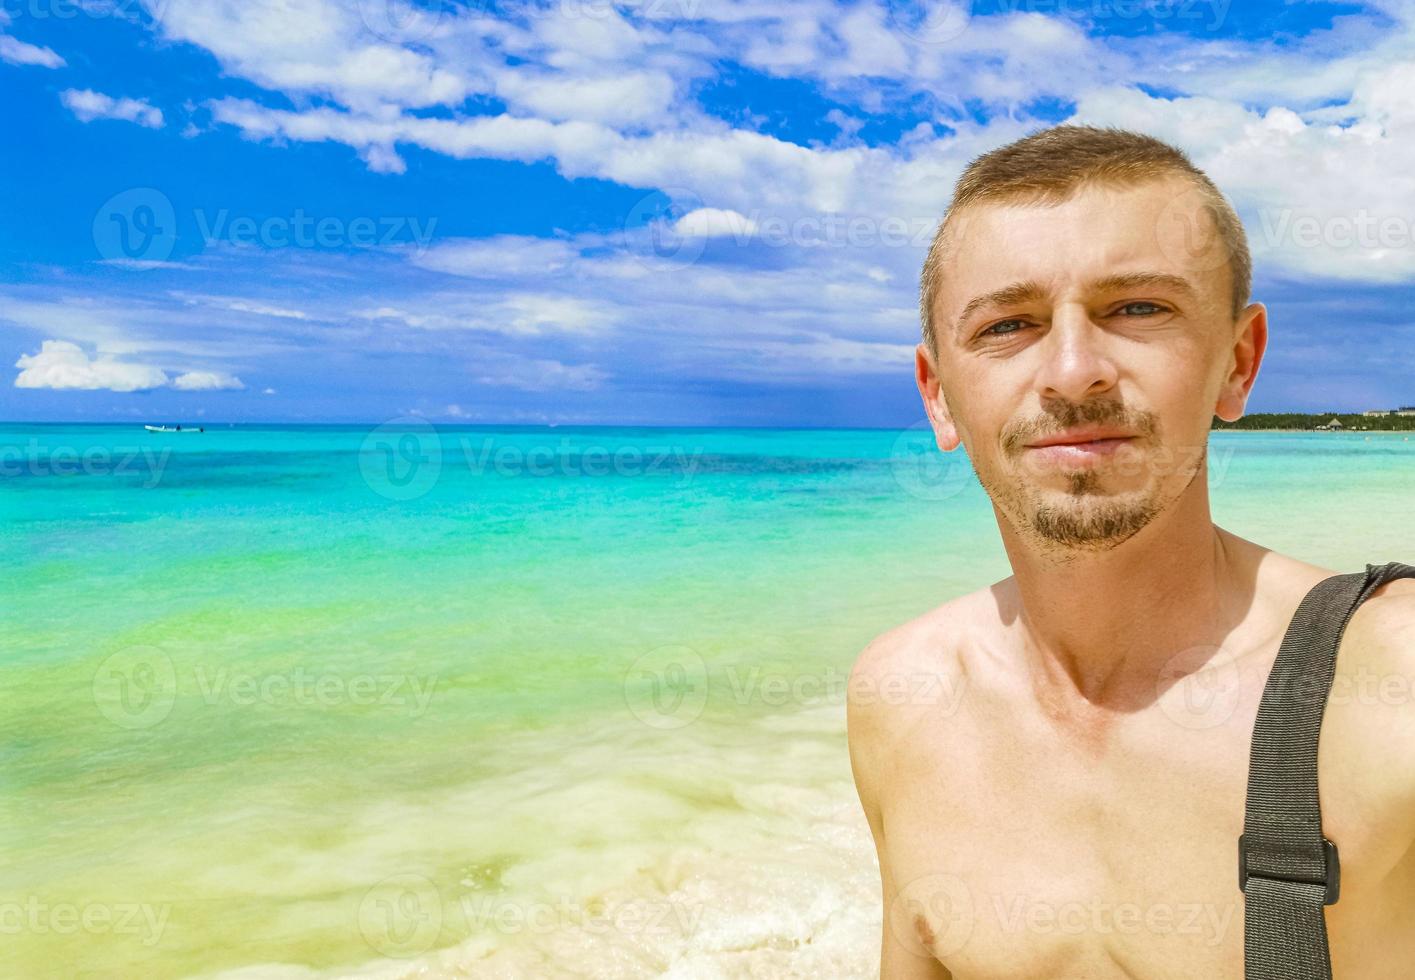 viajero turista ruso masculino playa tropical playa del carmen méxico. foto